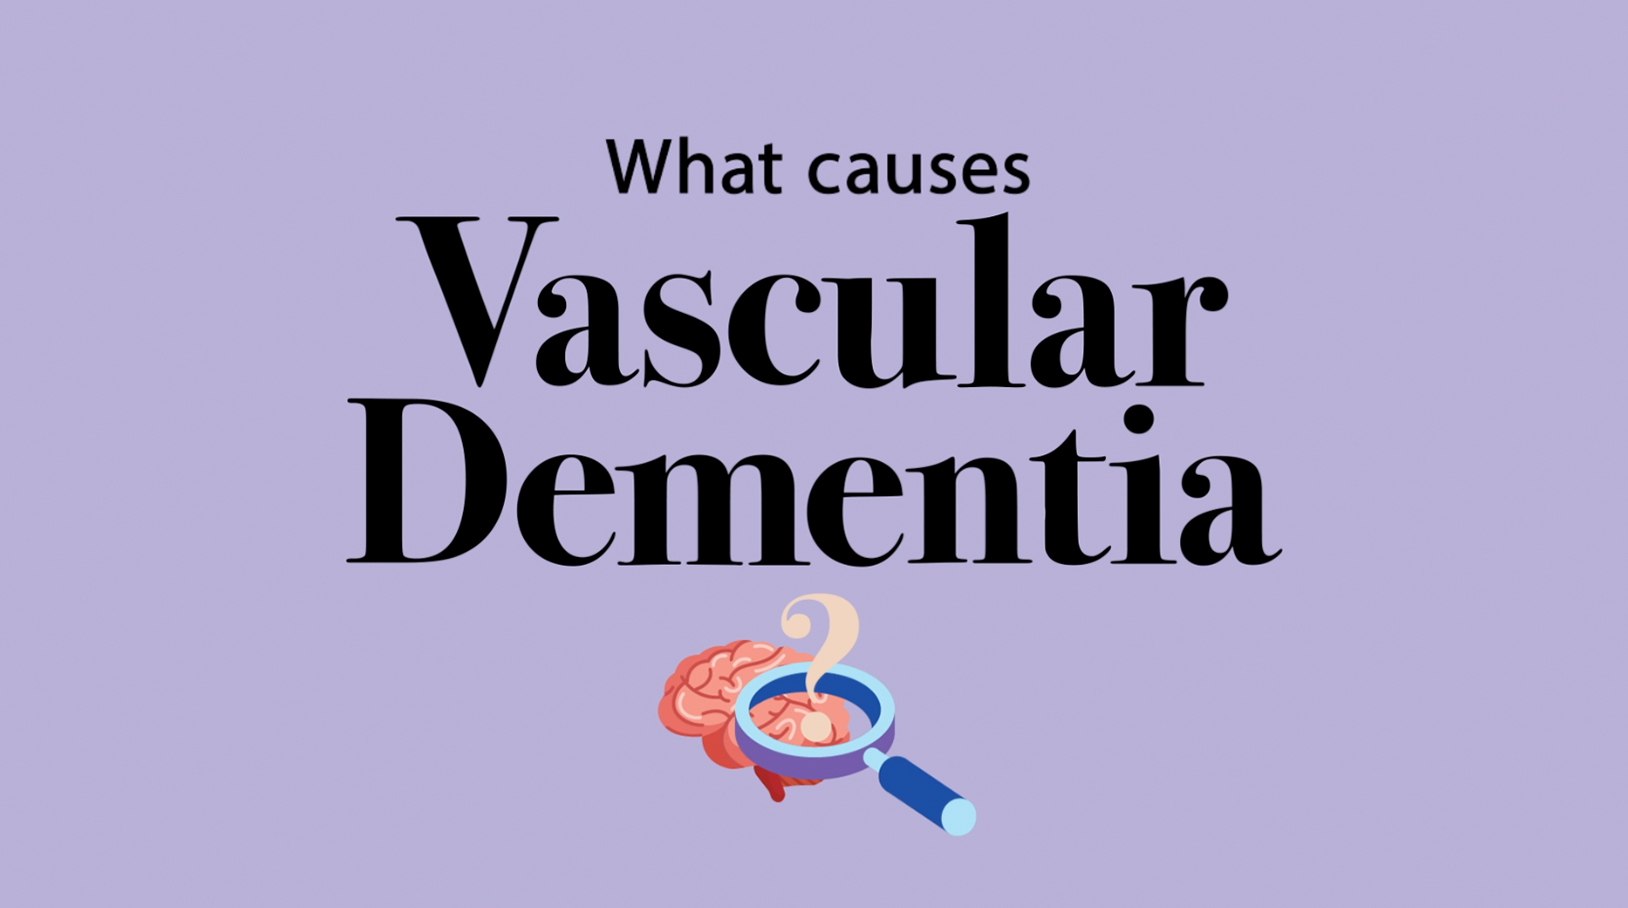 Let’s Talk About Vascular Dementia